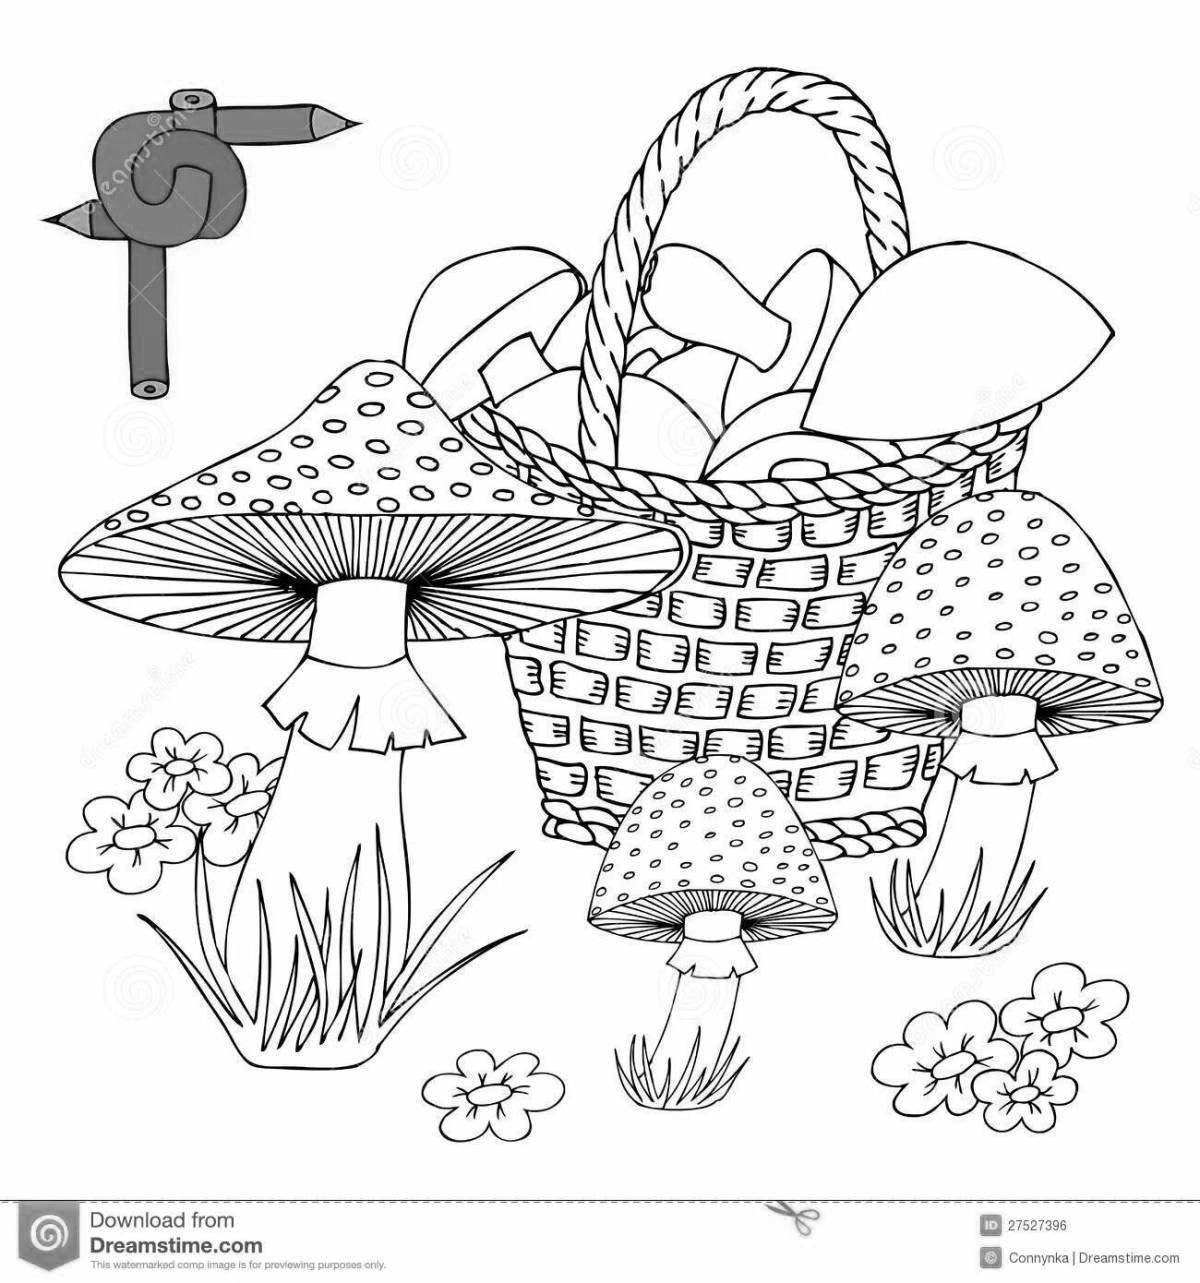 Adorable mushroom basket coloring page